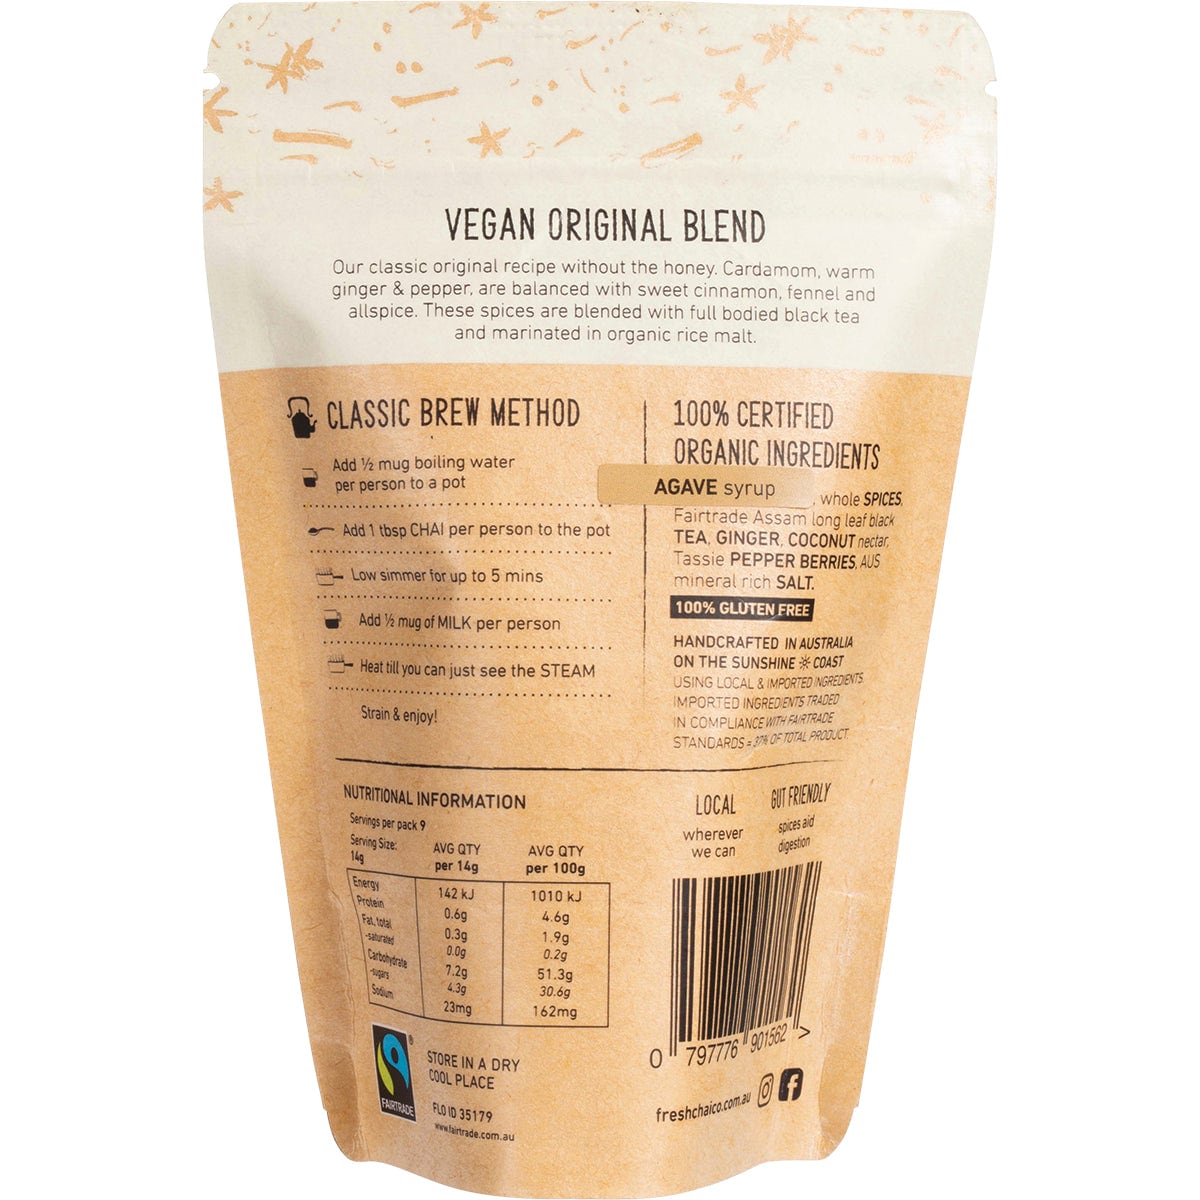 The Fresh Chai Co Vegan Original Blend 125G